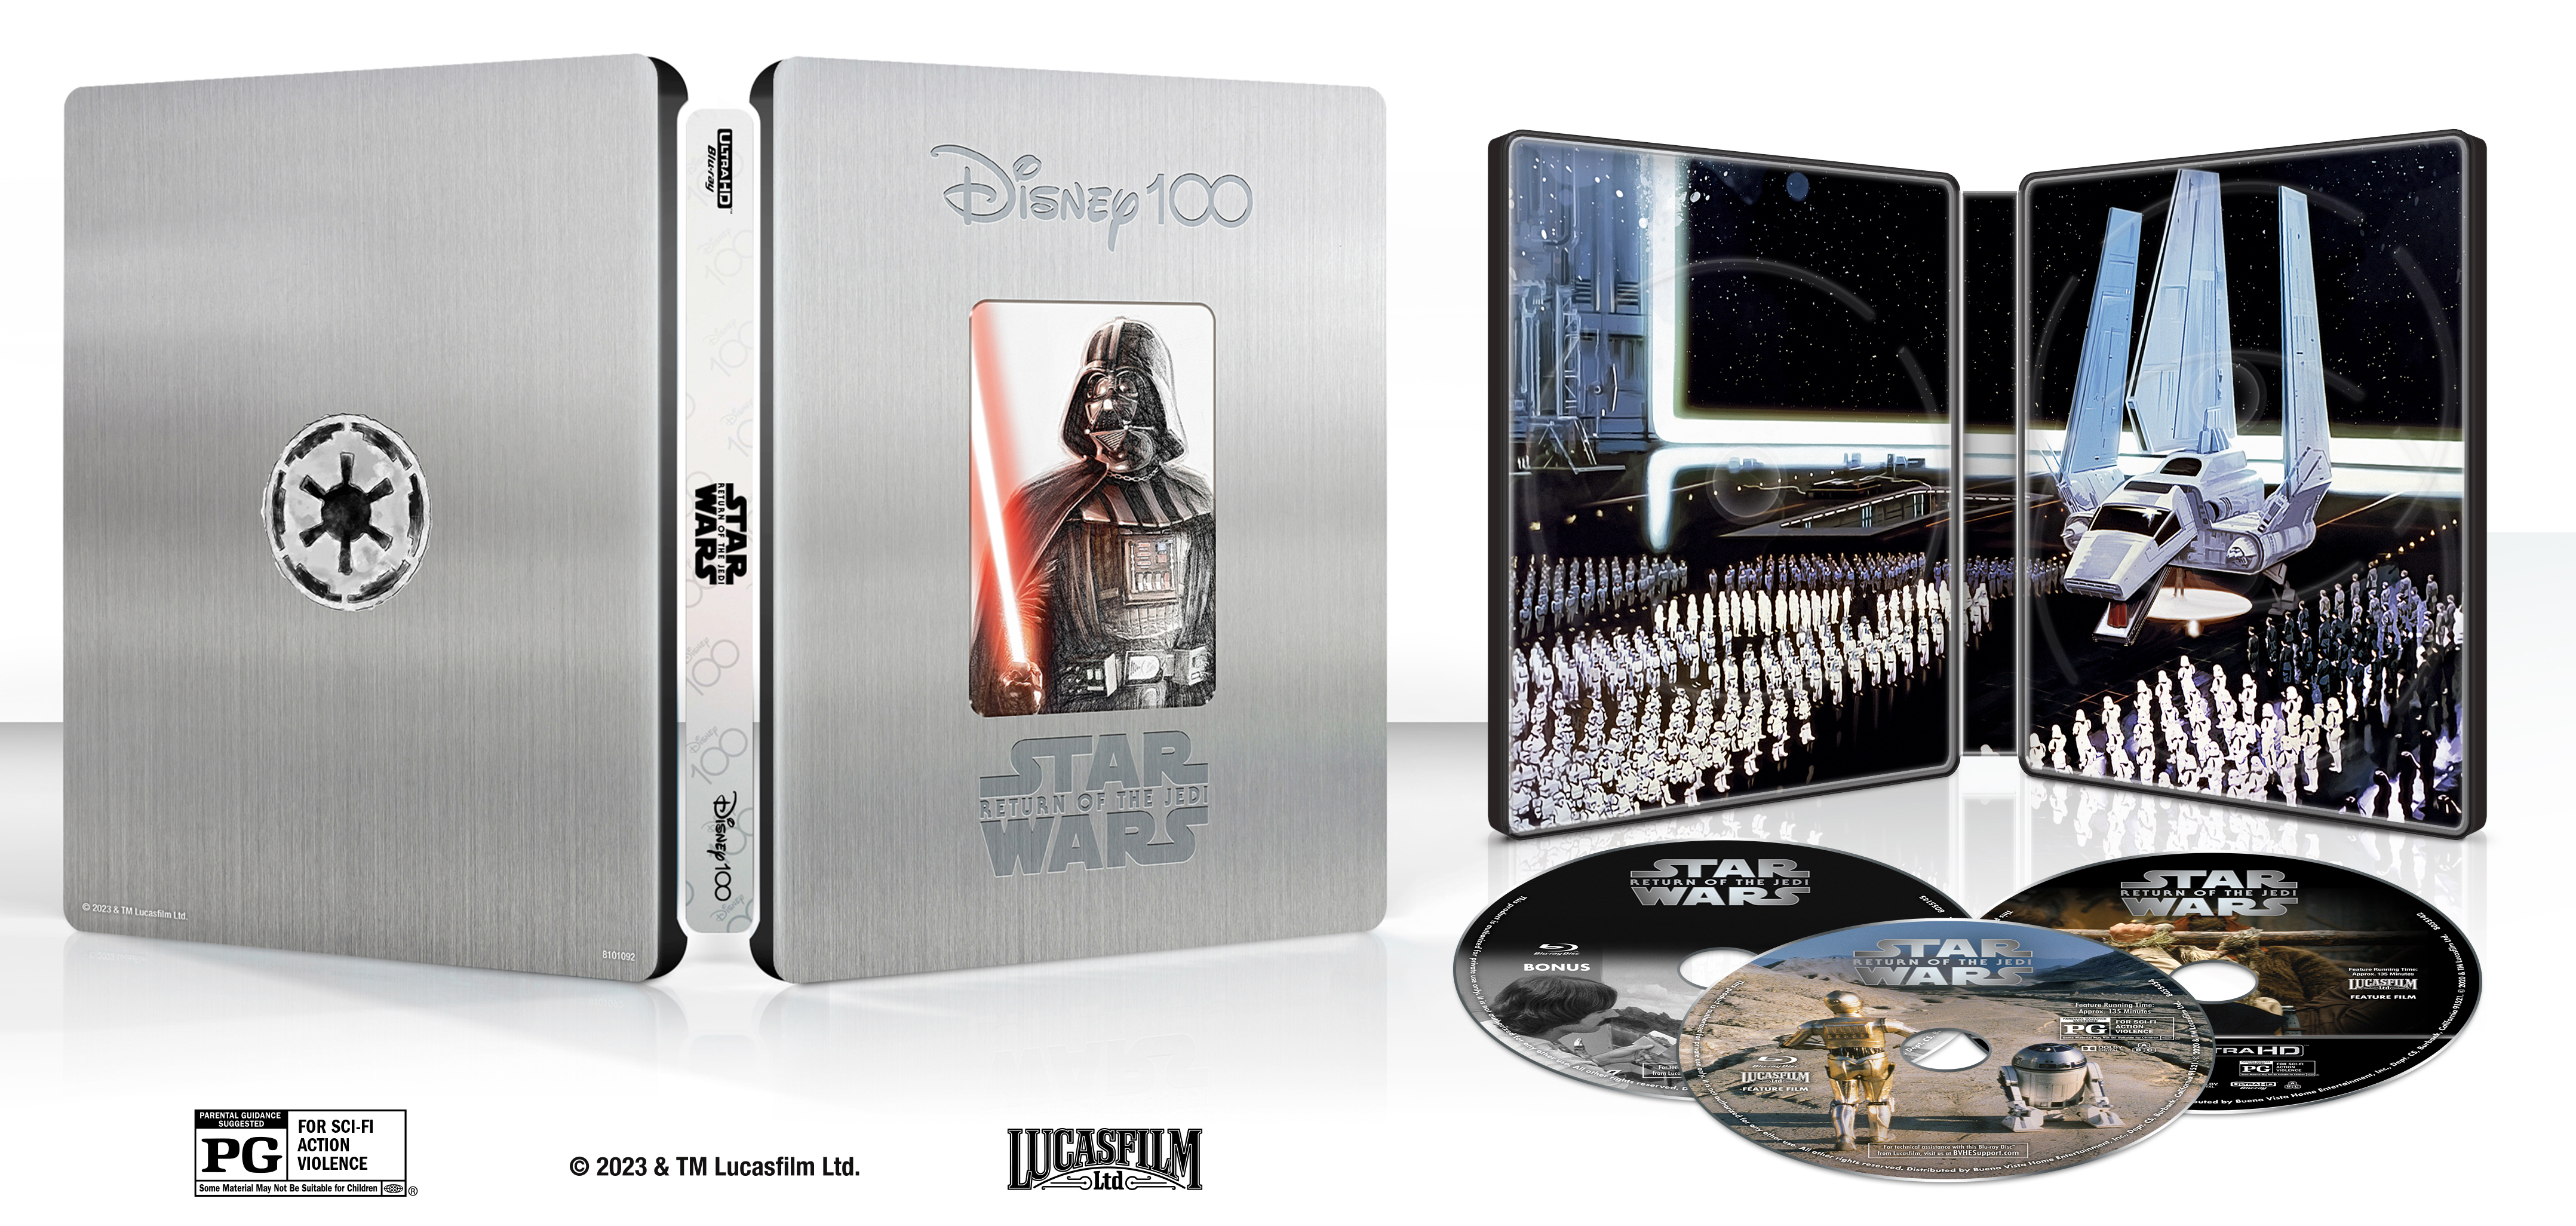 Star Wars: The Last Jedi [Includes Digital Copy] [Blu-ray] [2017] - Best Buy